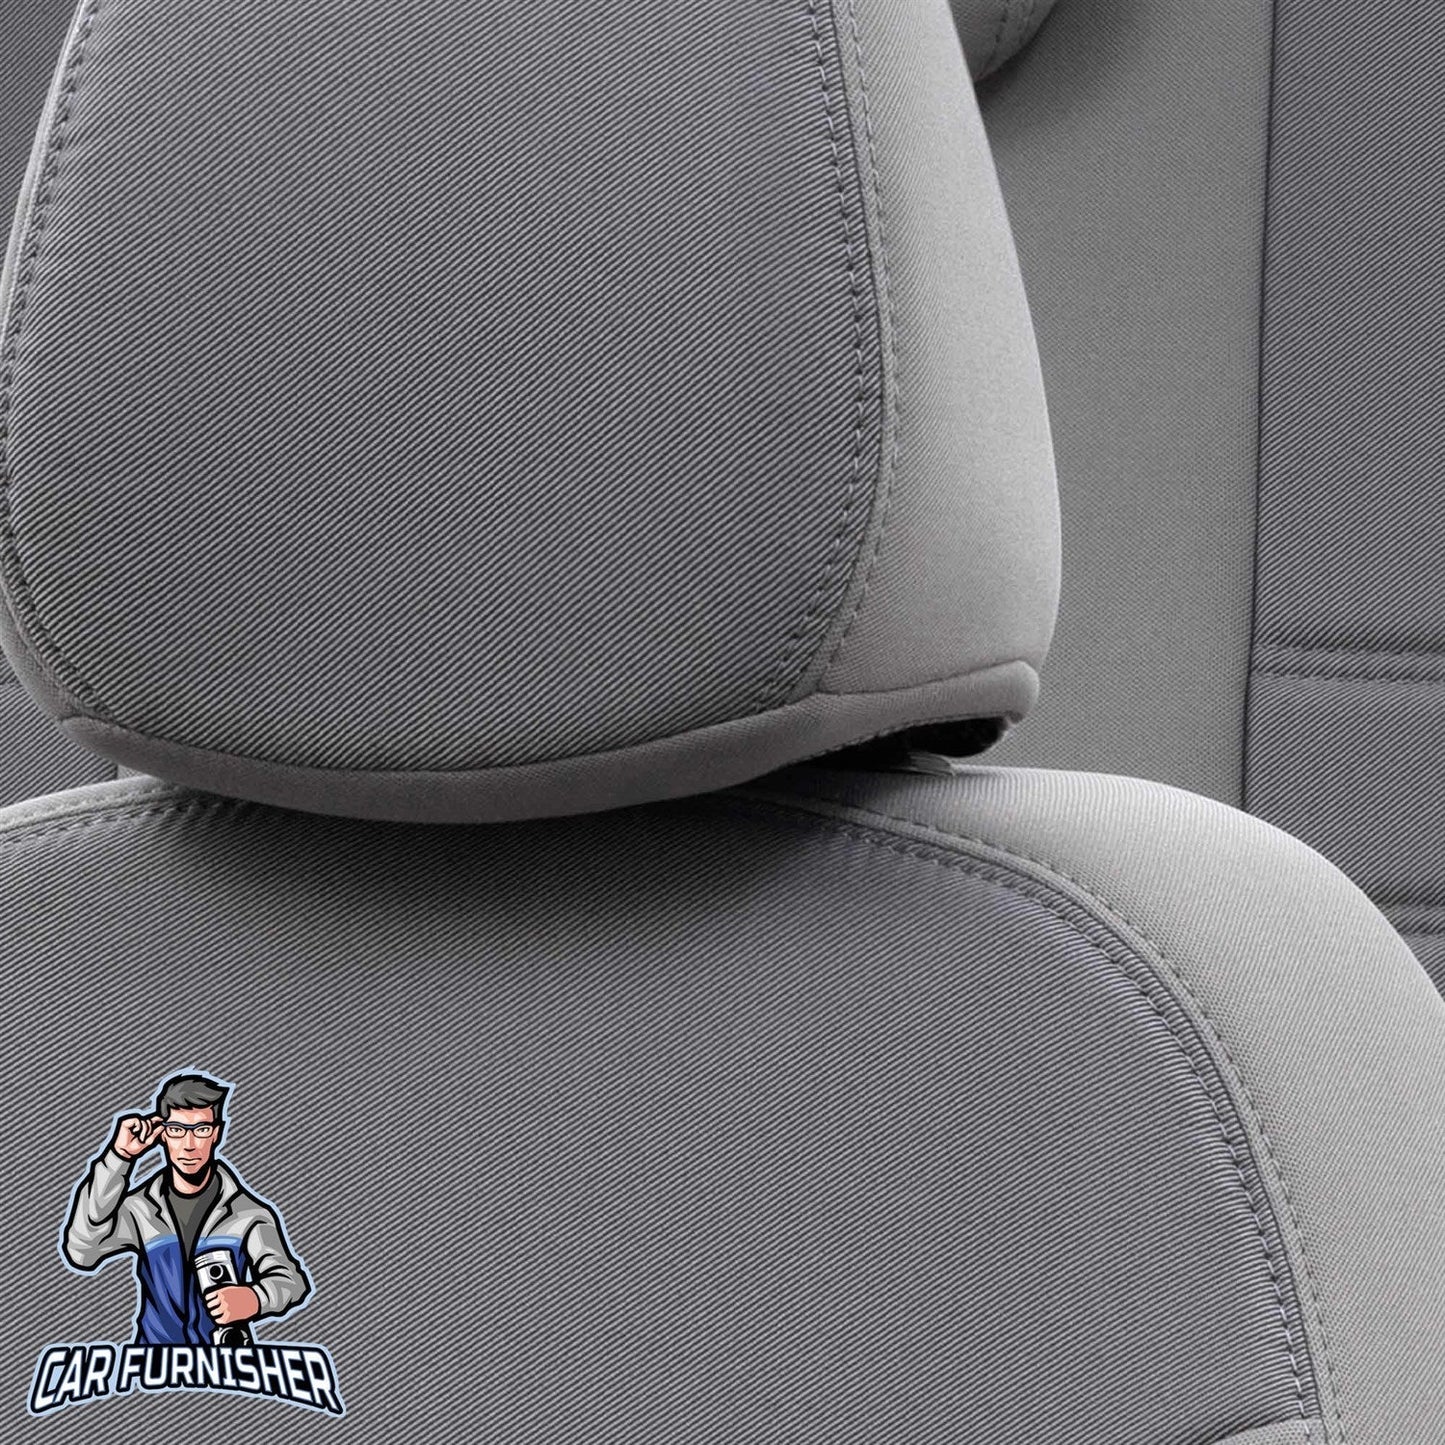 Suzuki Vitara Seat Covers Original Jacquard Design Gray Jacquard Fabric